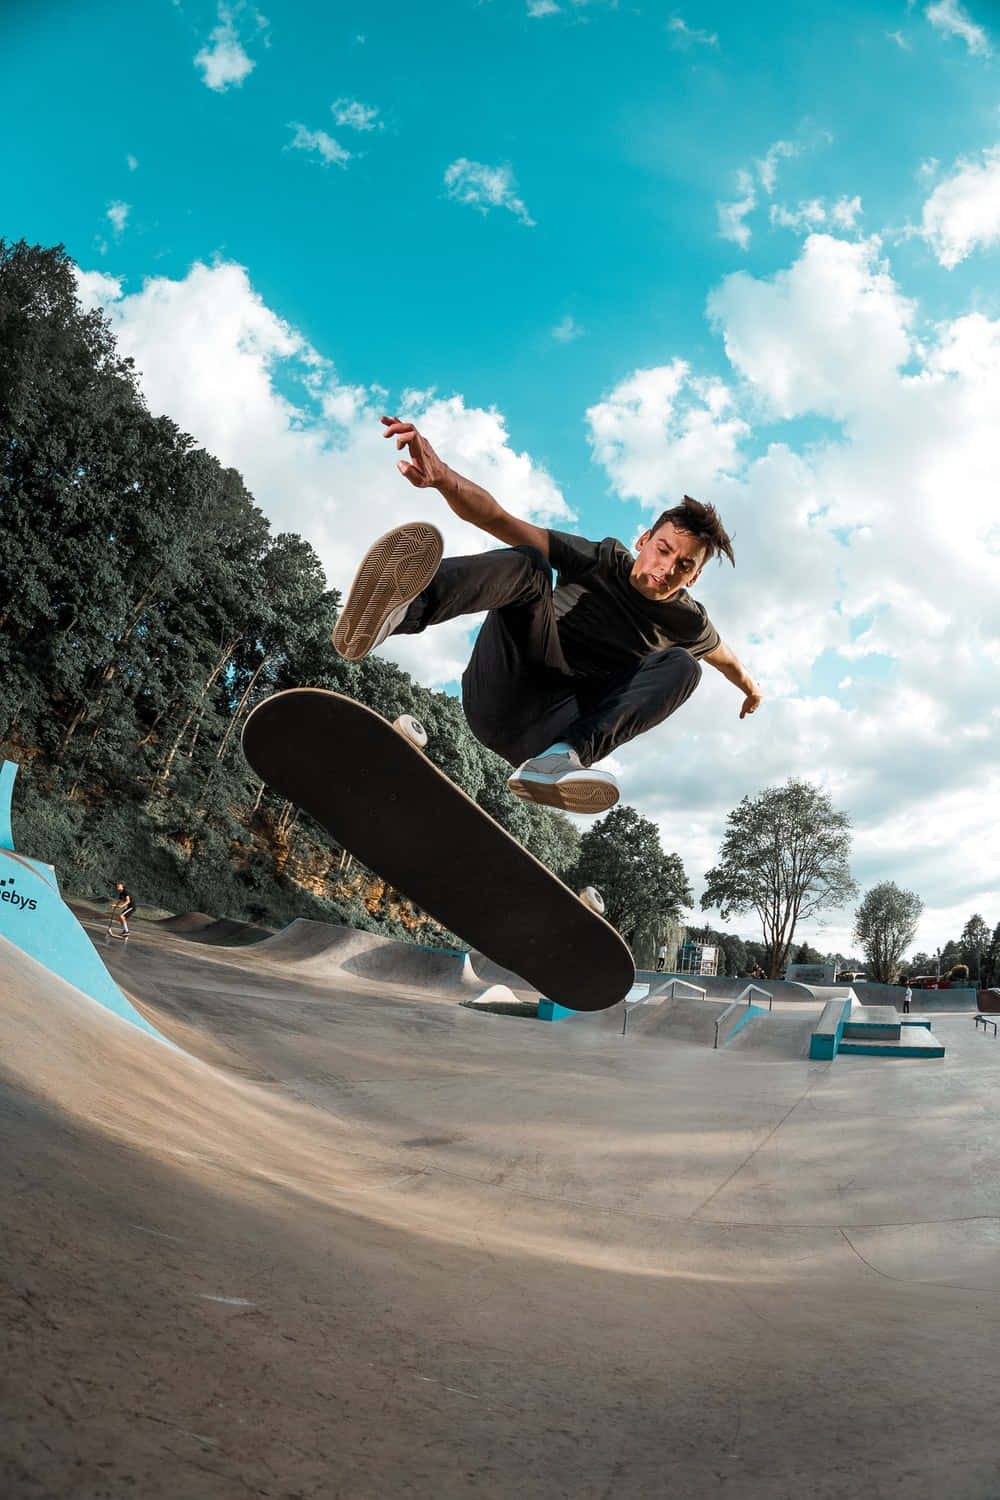 A Man Is Doing A Trick On A Skateboard Wallpaper